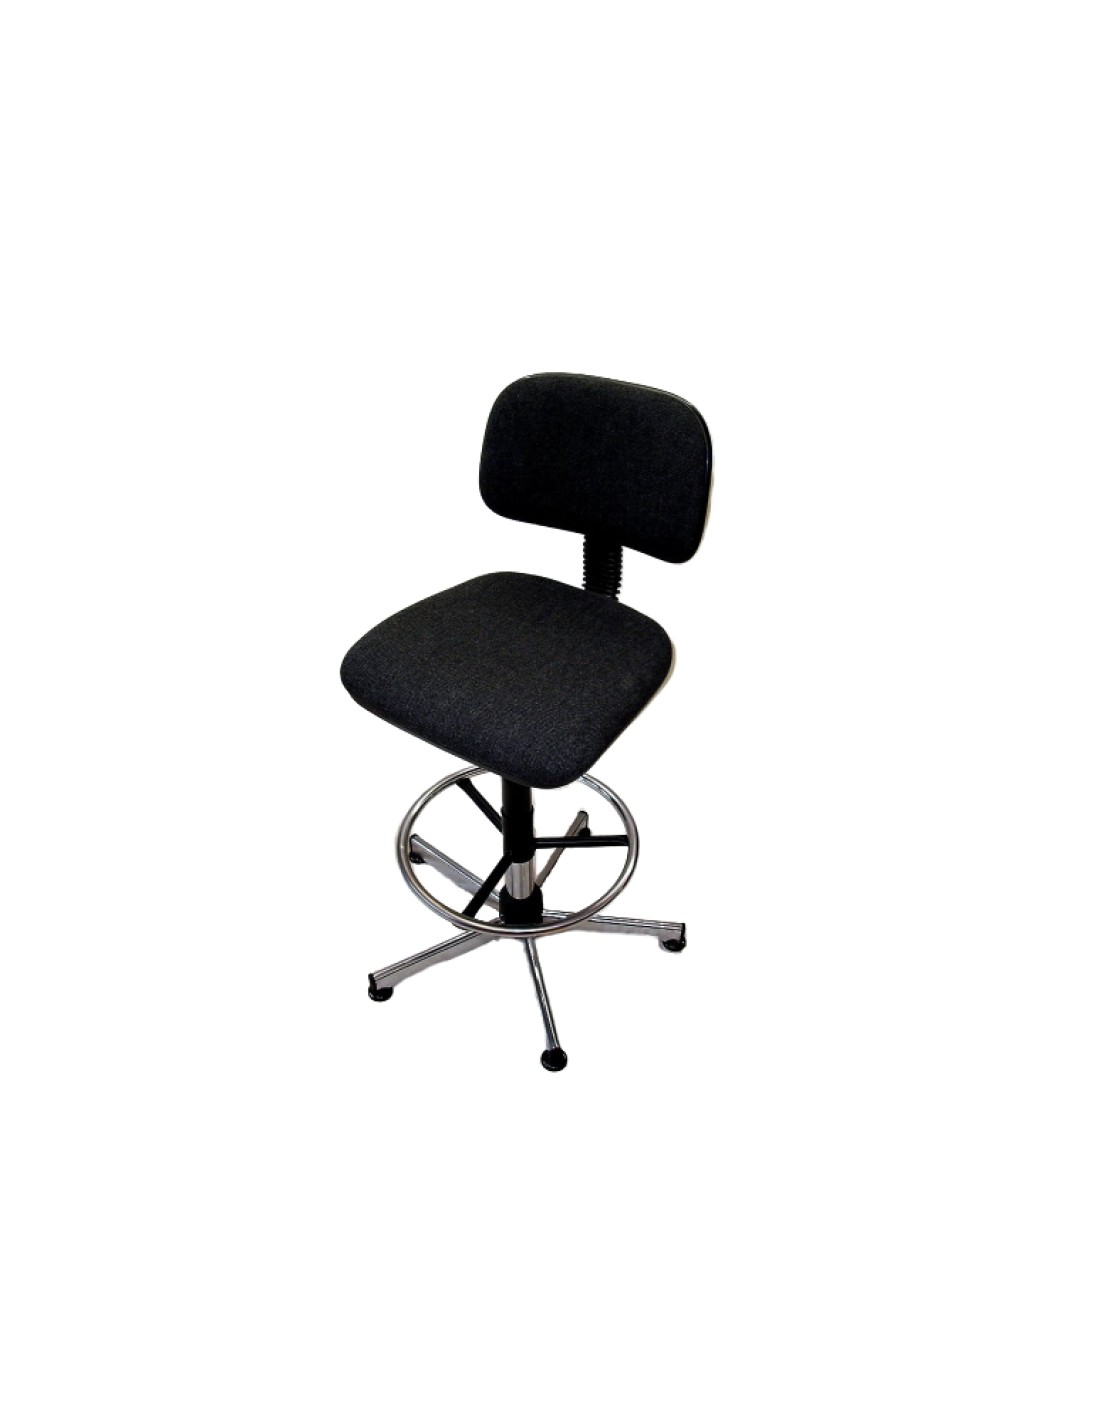 Upholstered stool with backrest